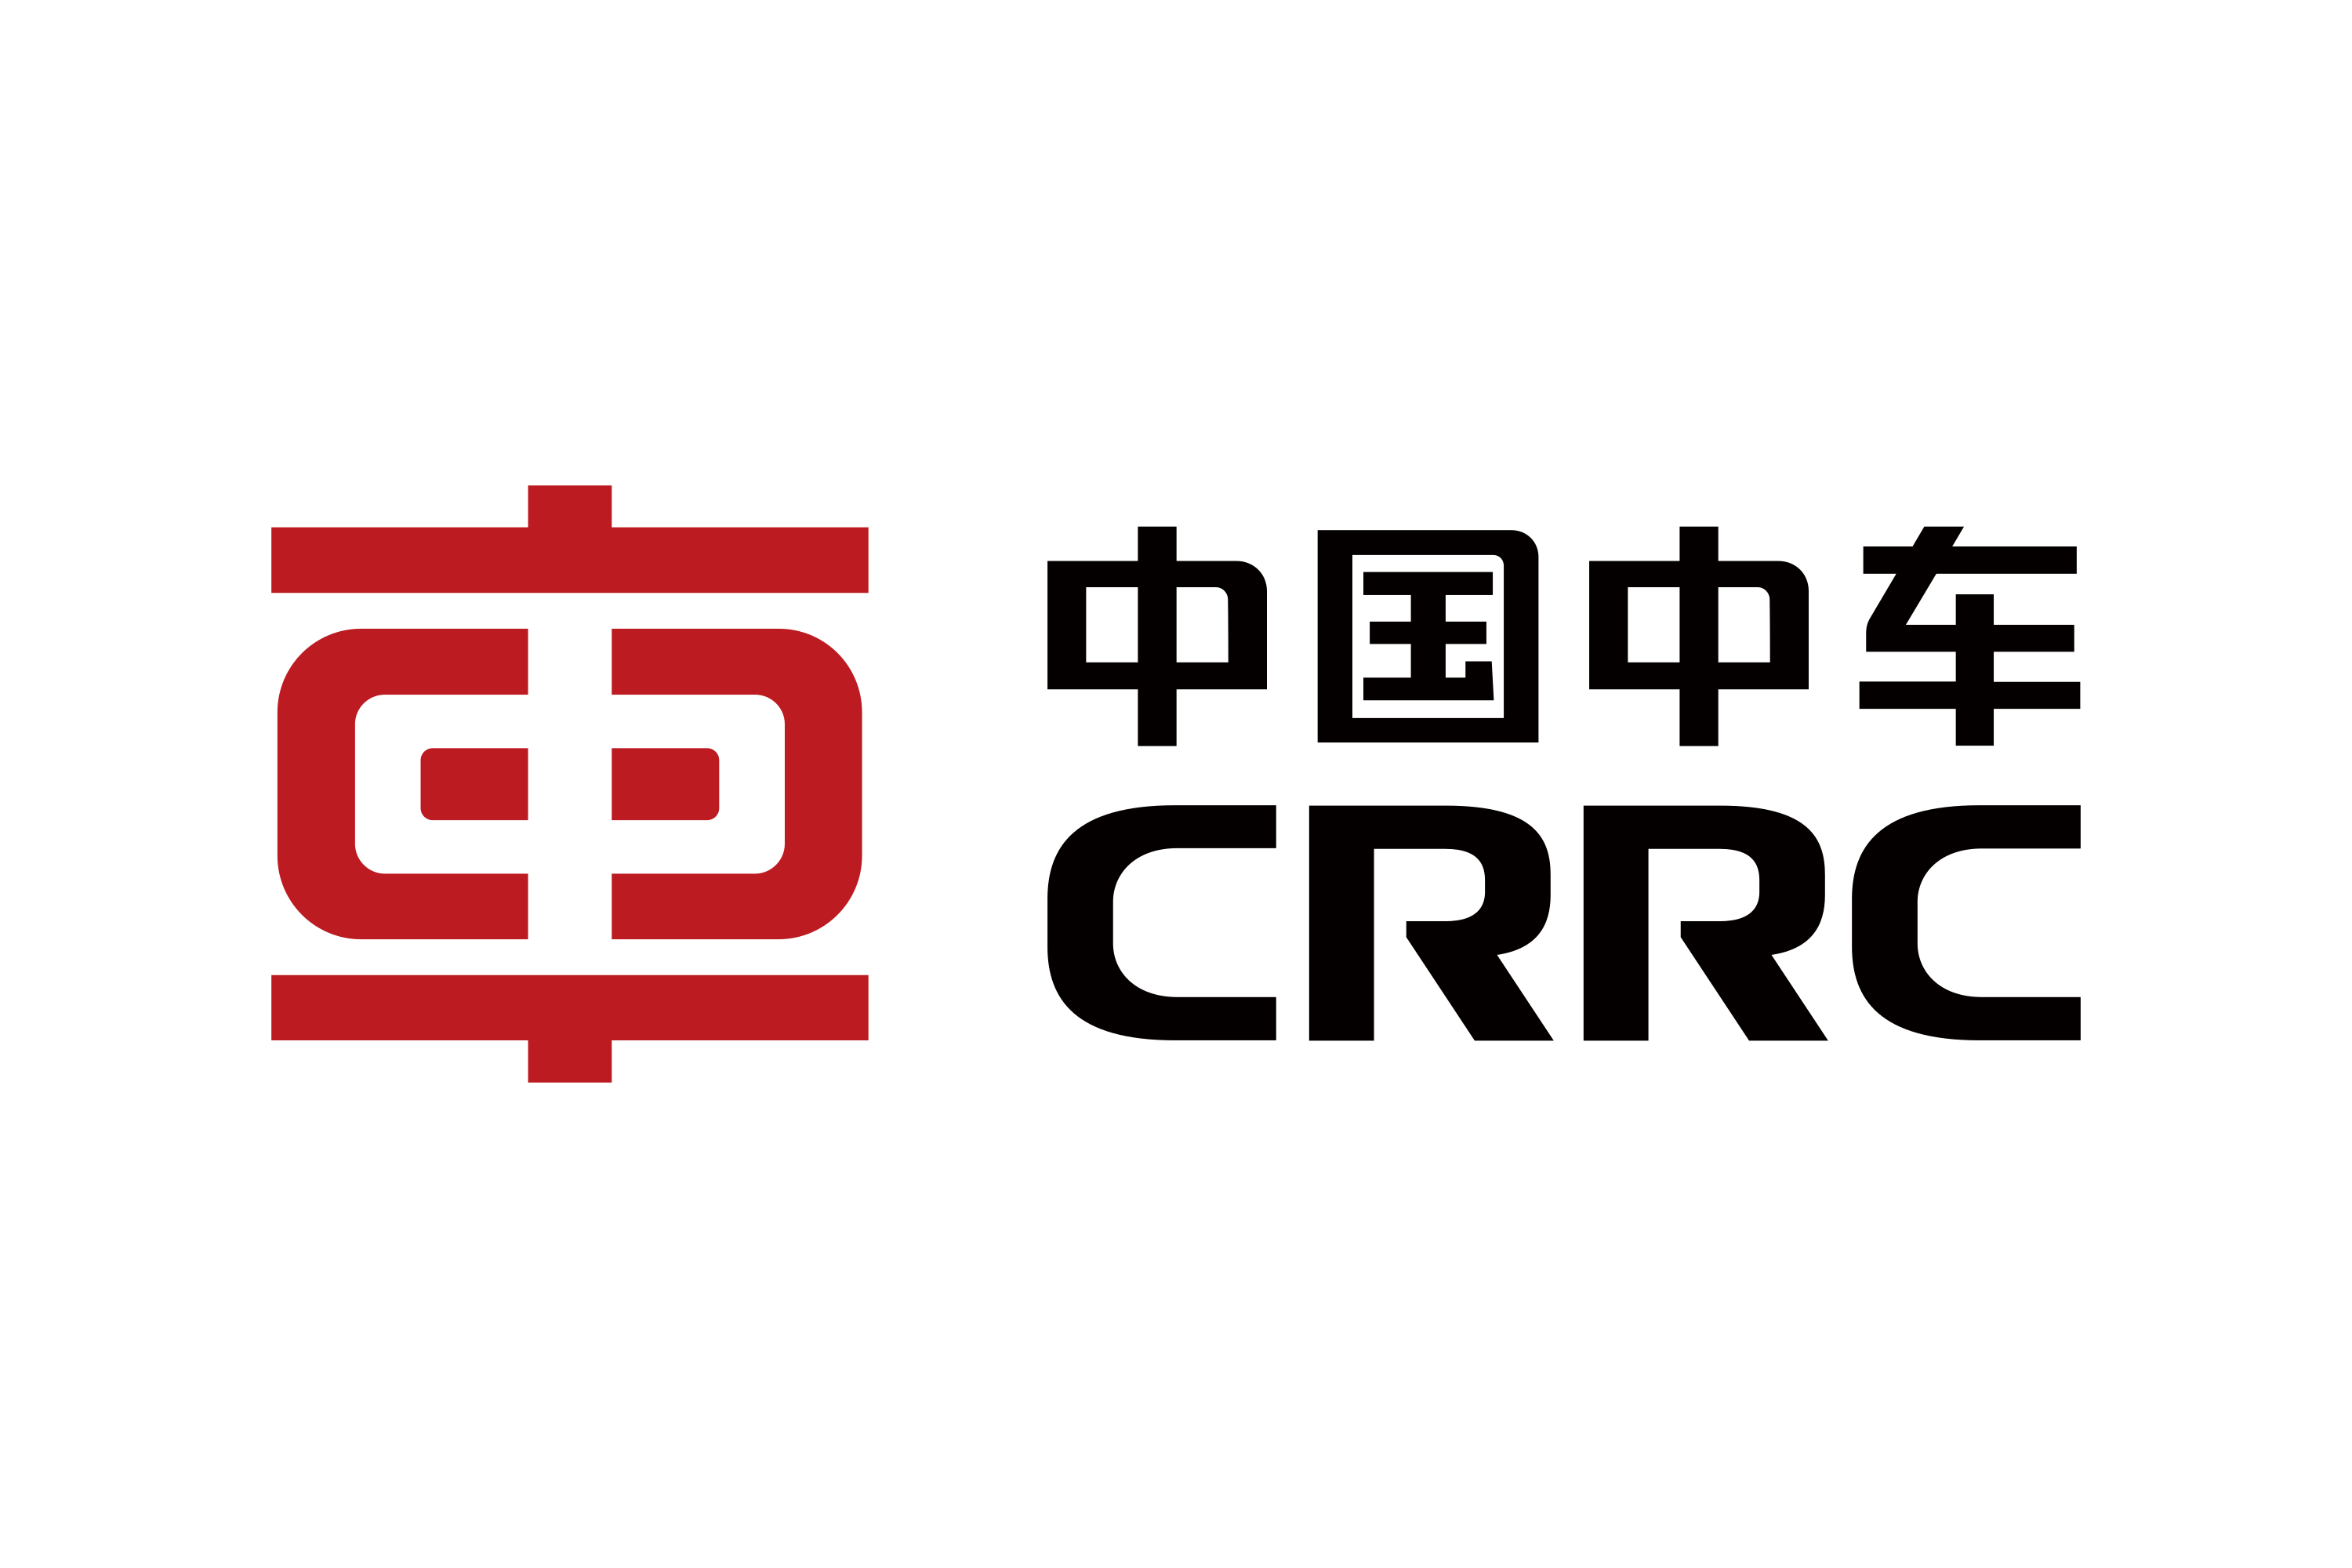 Download CRRC Zhuzhou Electric Locomotive Logo in SVG Vector or PNG File  Format - Logo.wine